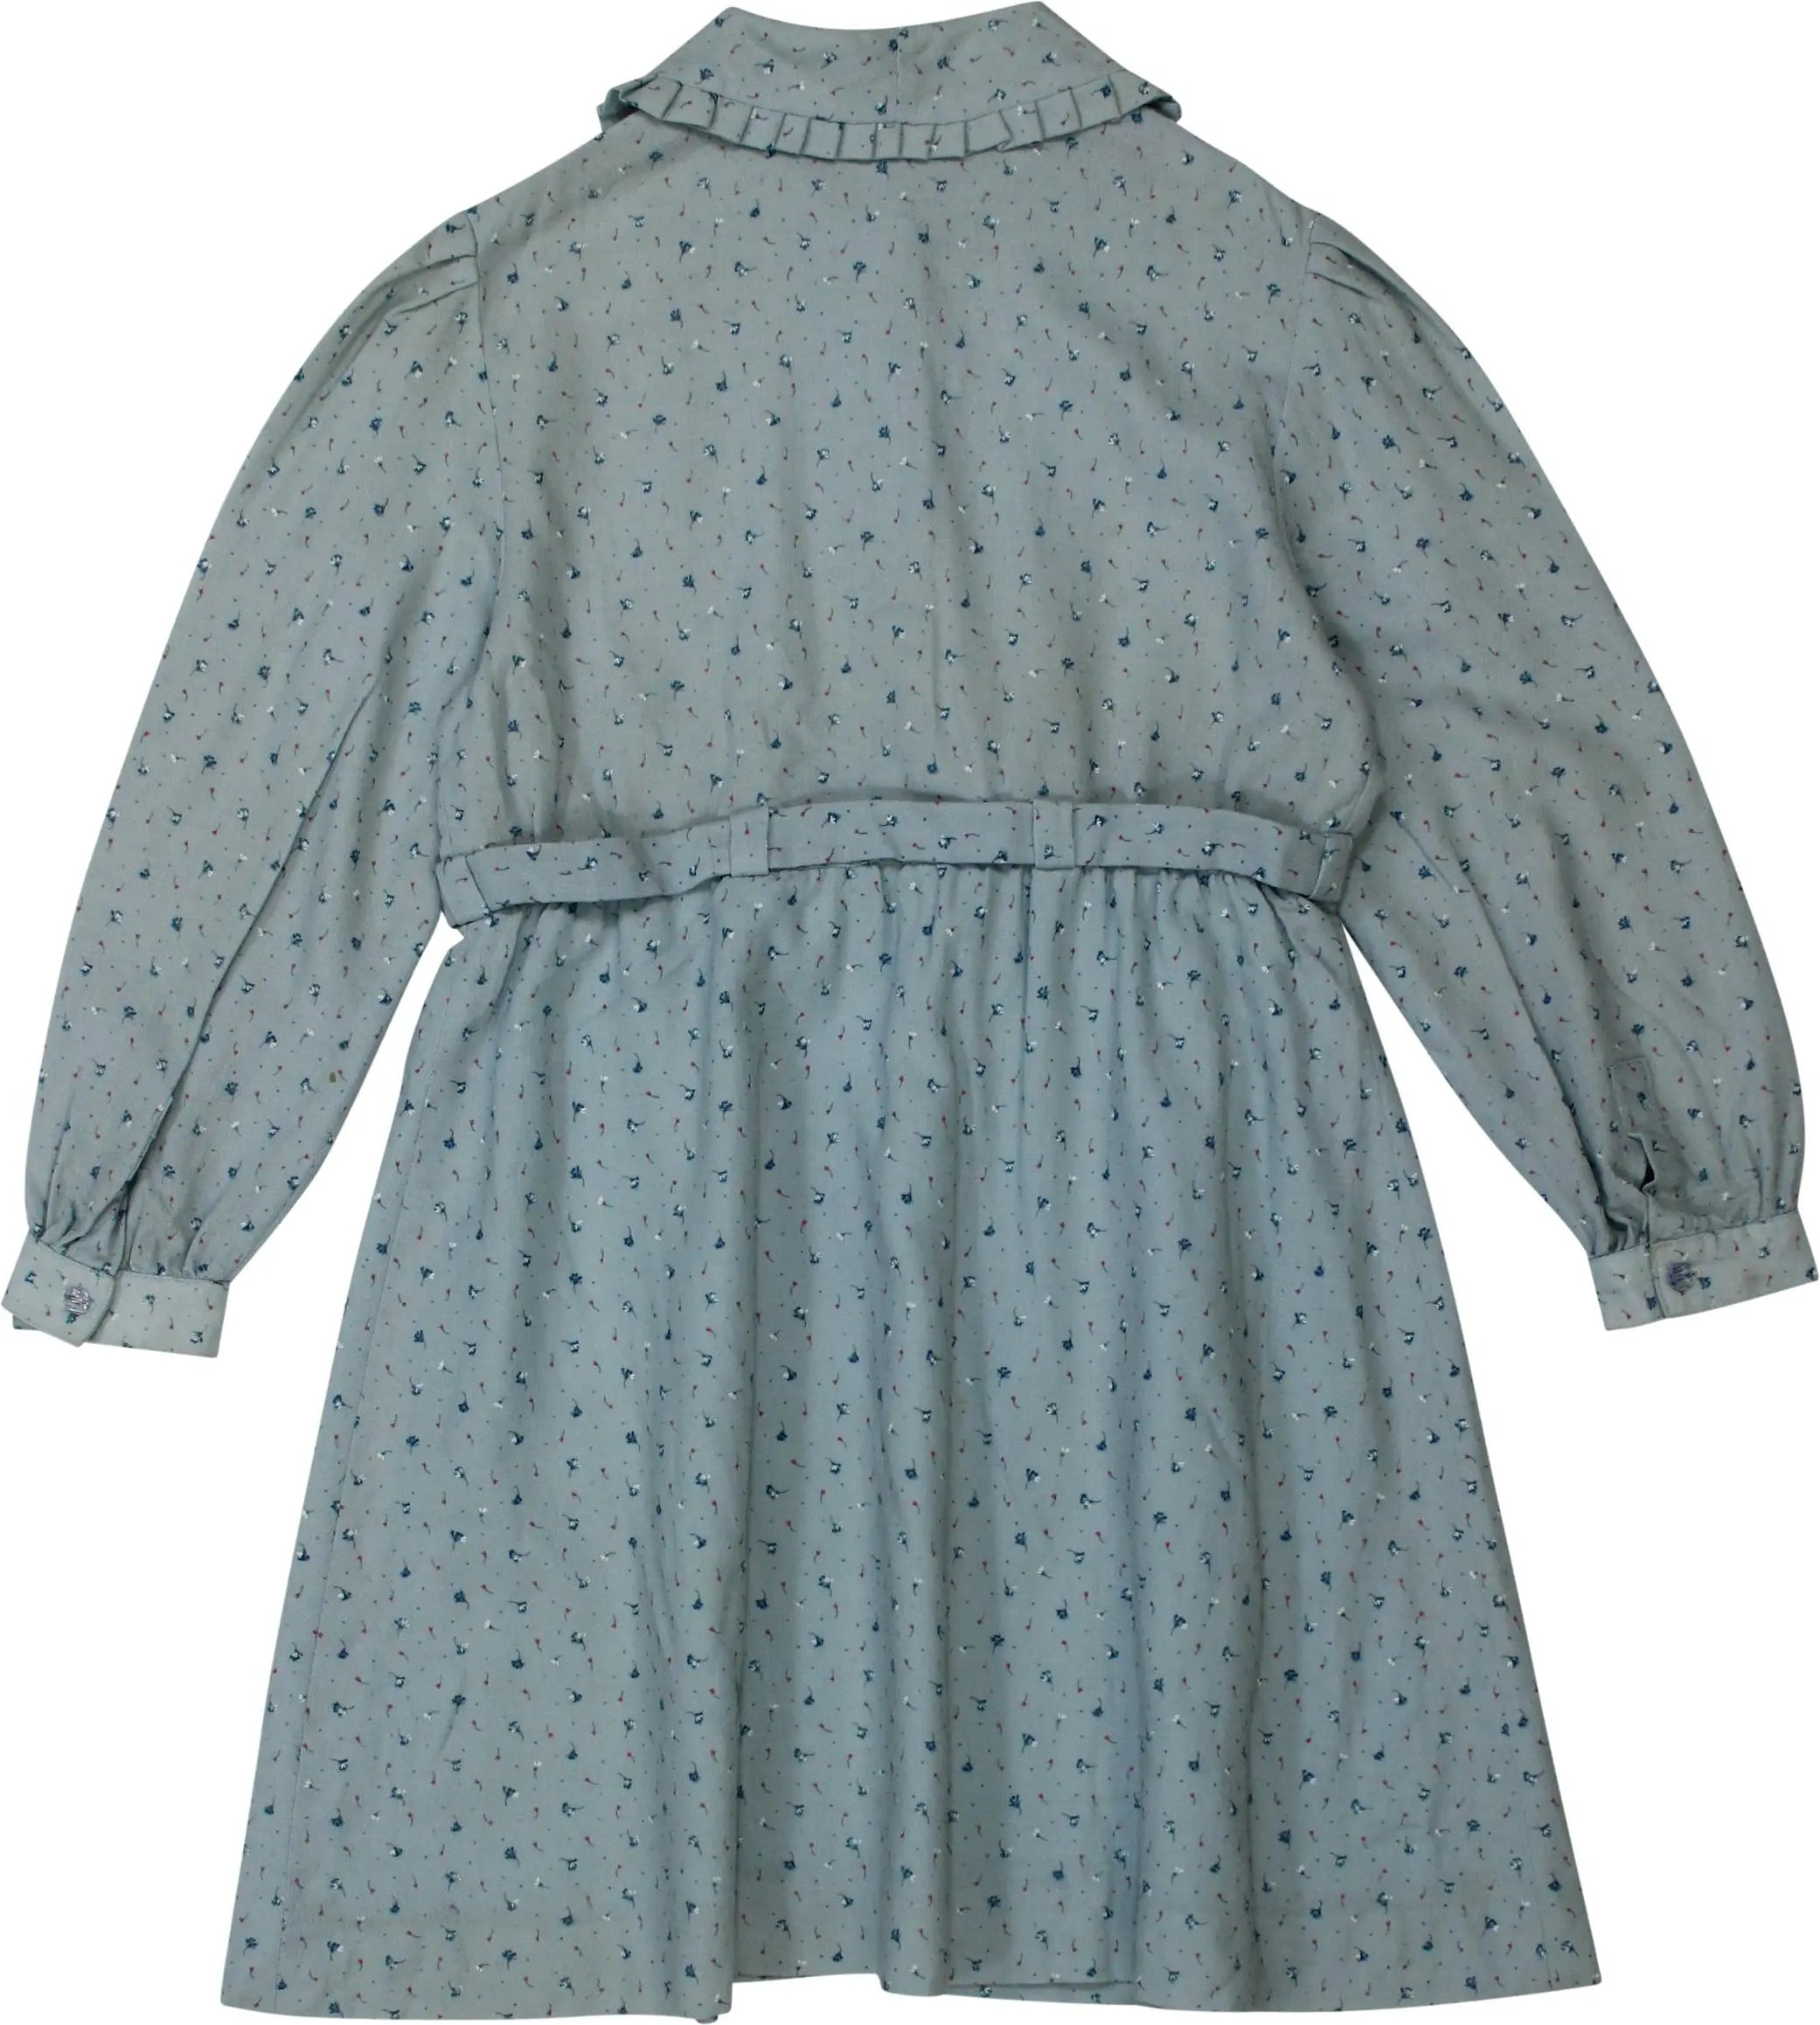 La Rosa - Blue Dress- ThriftTale.com - Vintage and second handclothing